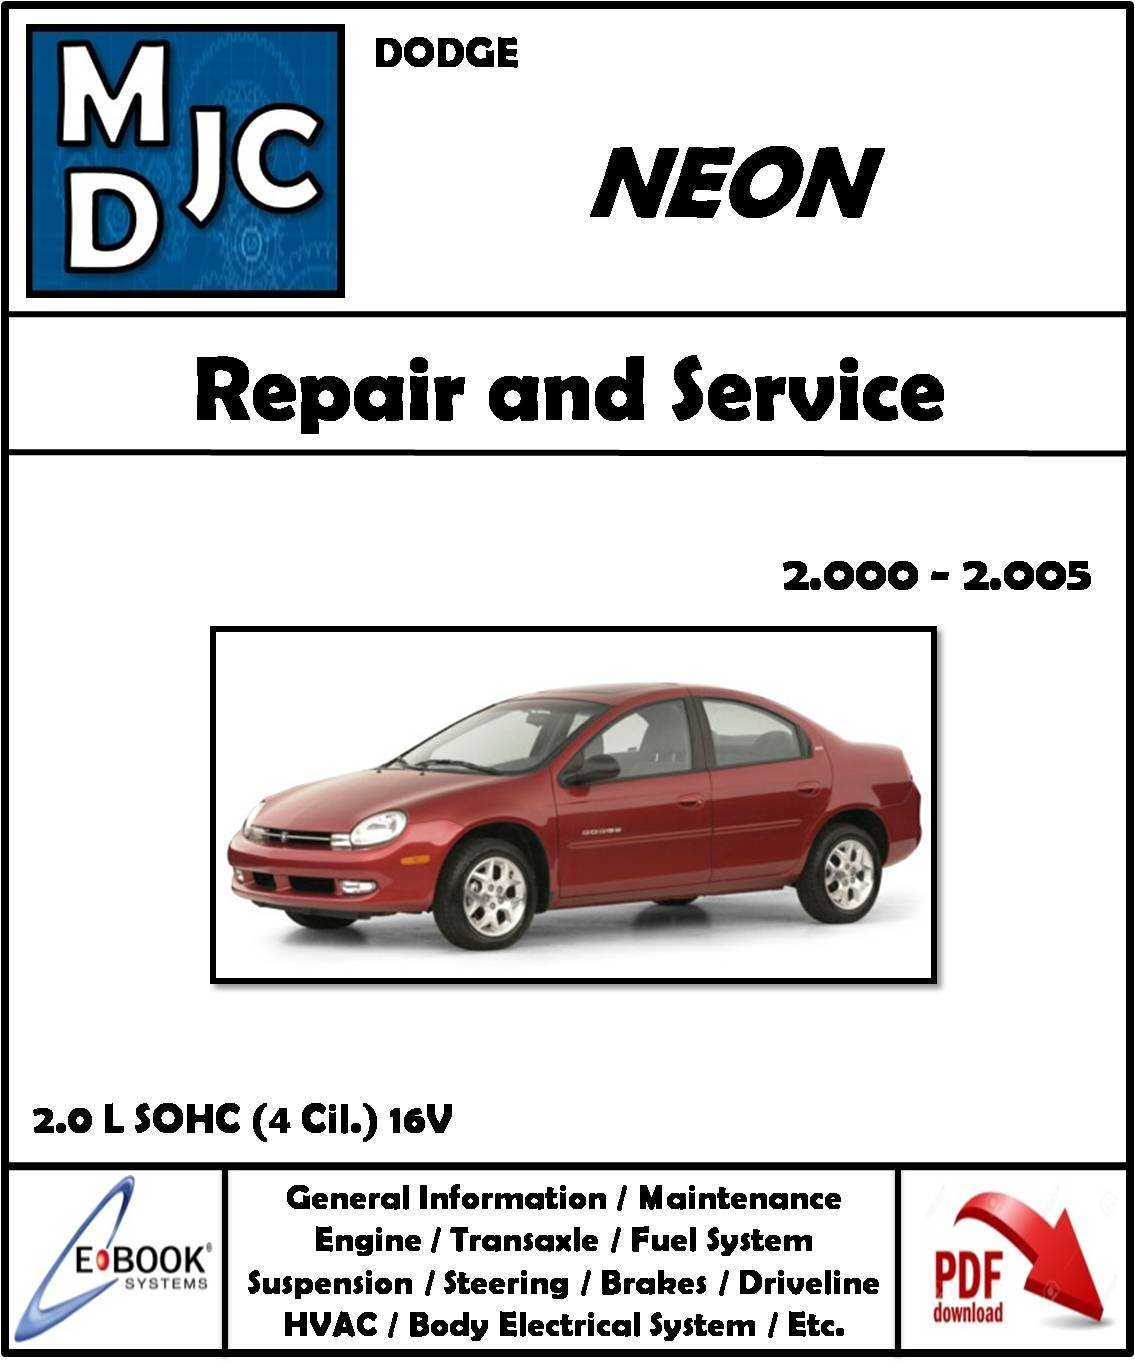 Manual de Taller Dodge / Chrysler Neon 2000-2005